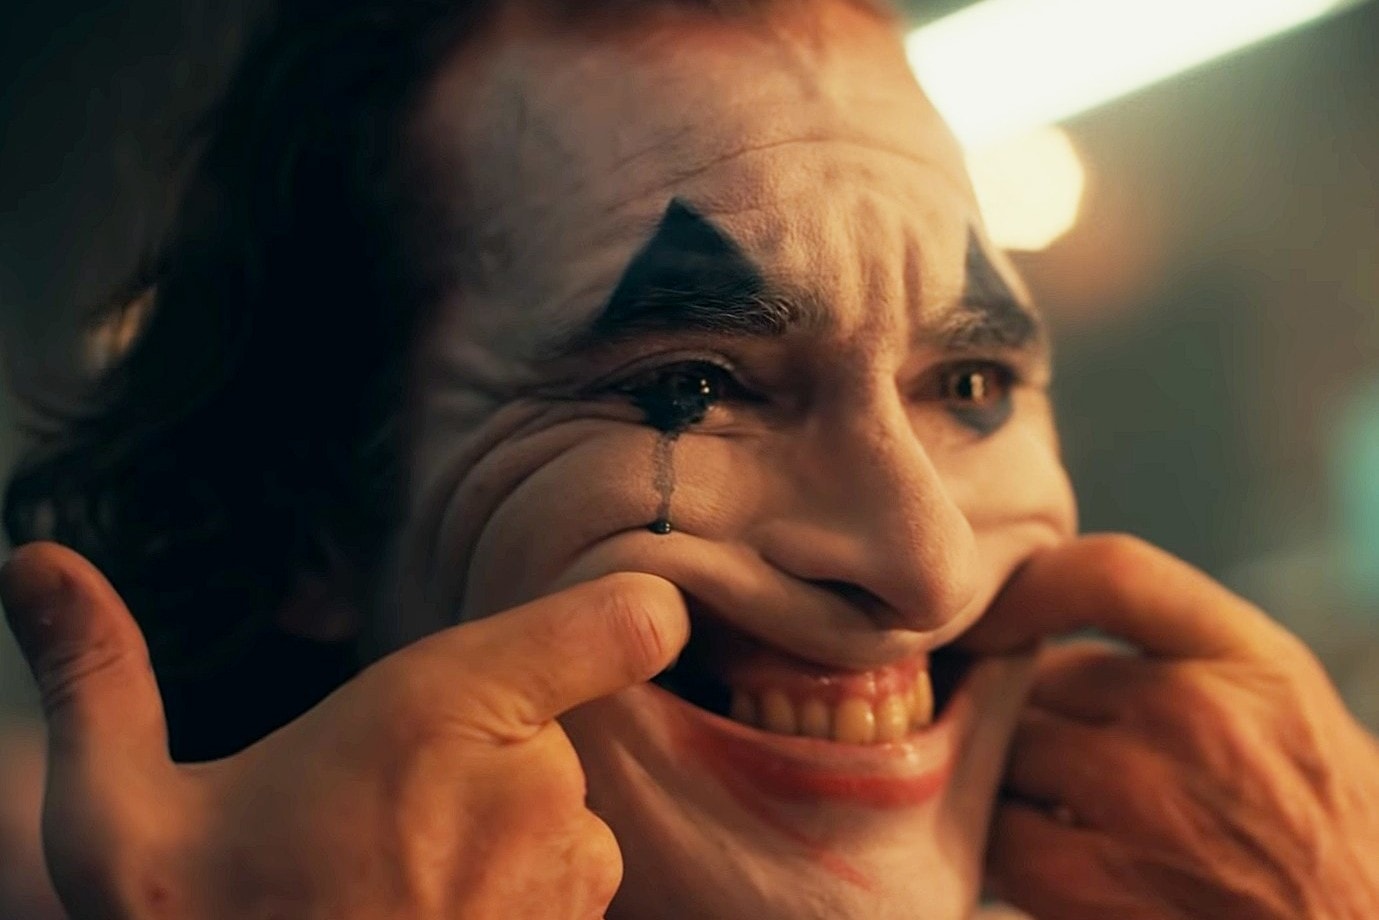 DC 獨立電影《Joker》奪下 2019 威尼斯影展金獅獎